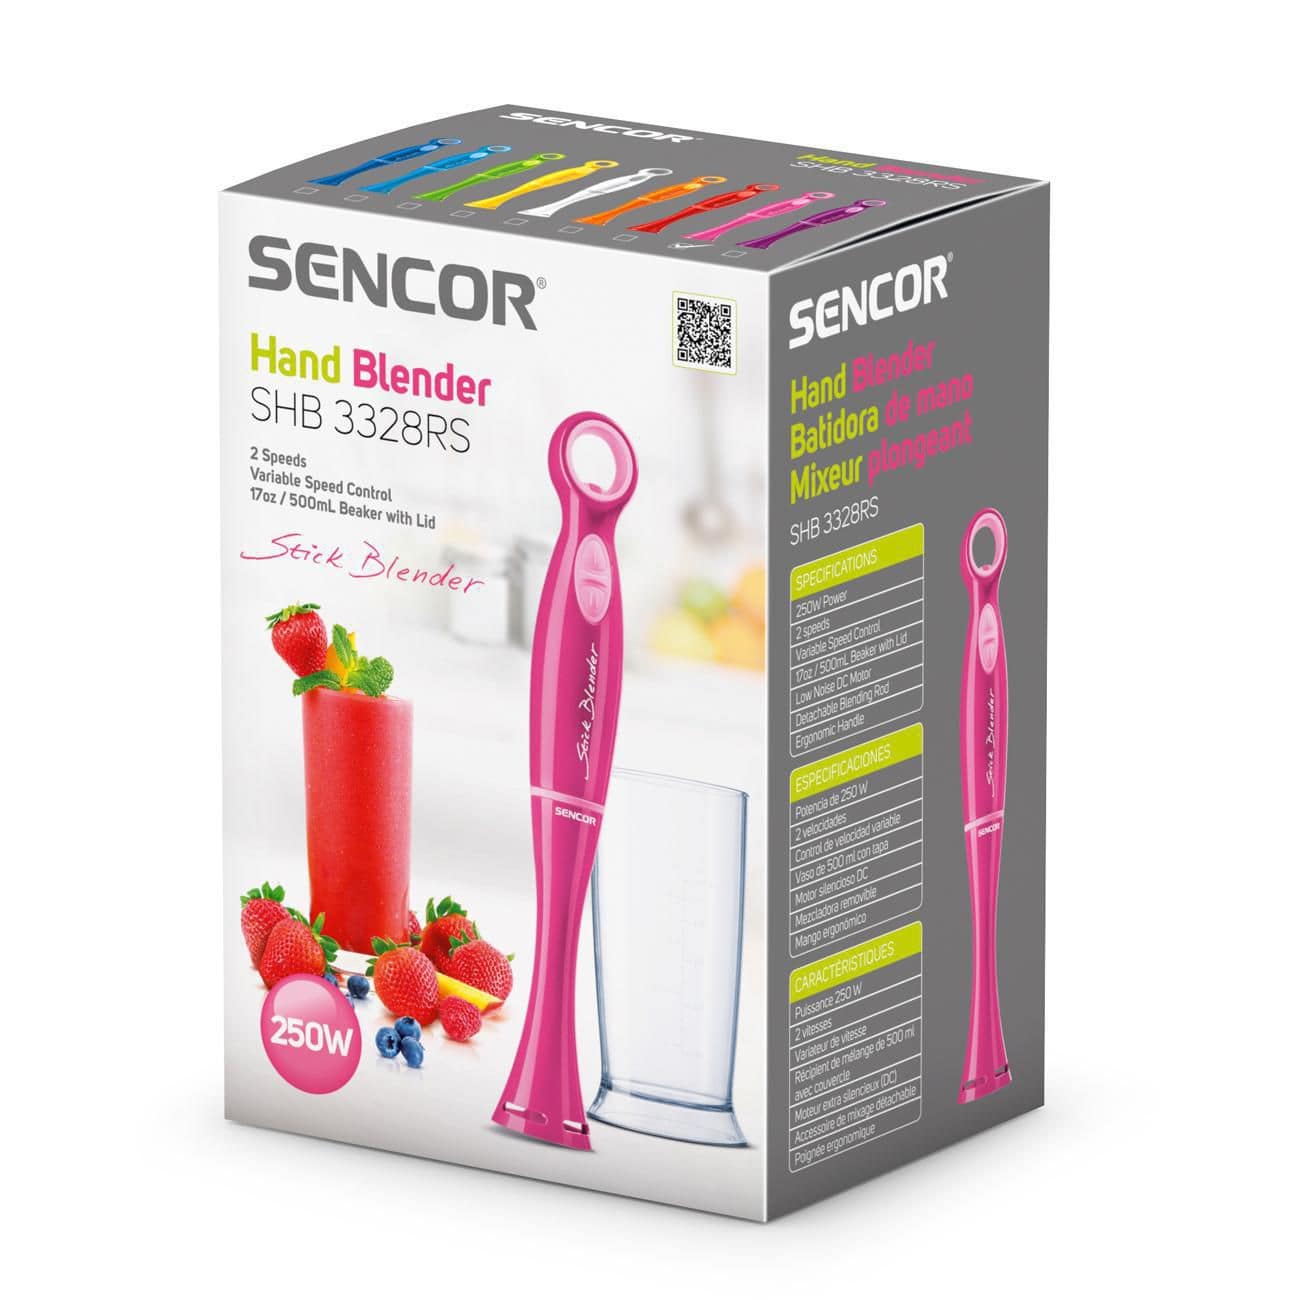 Sencor Hand Blender SHB 3328RS | TechSpirit Inc.